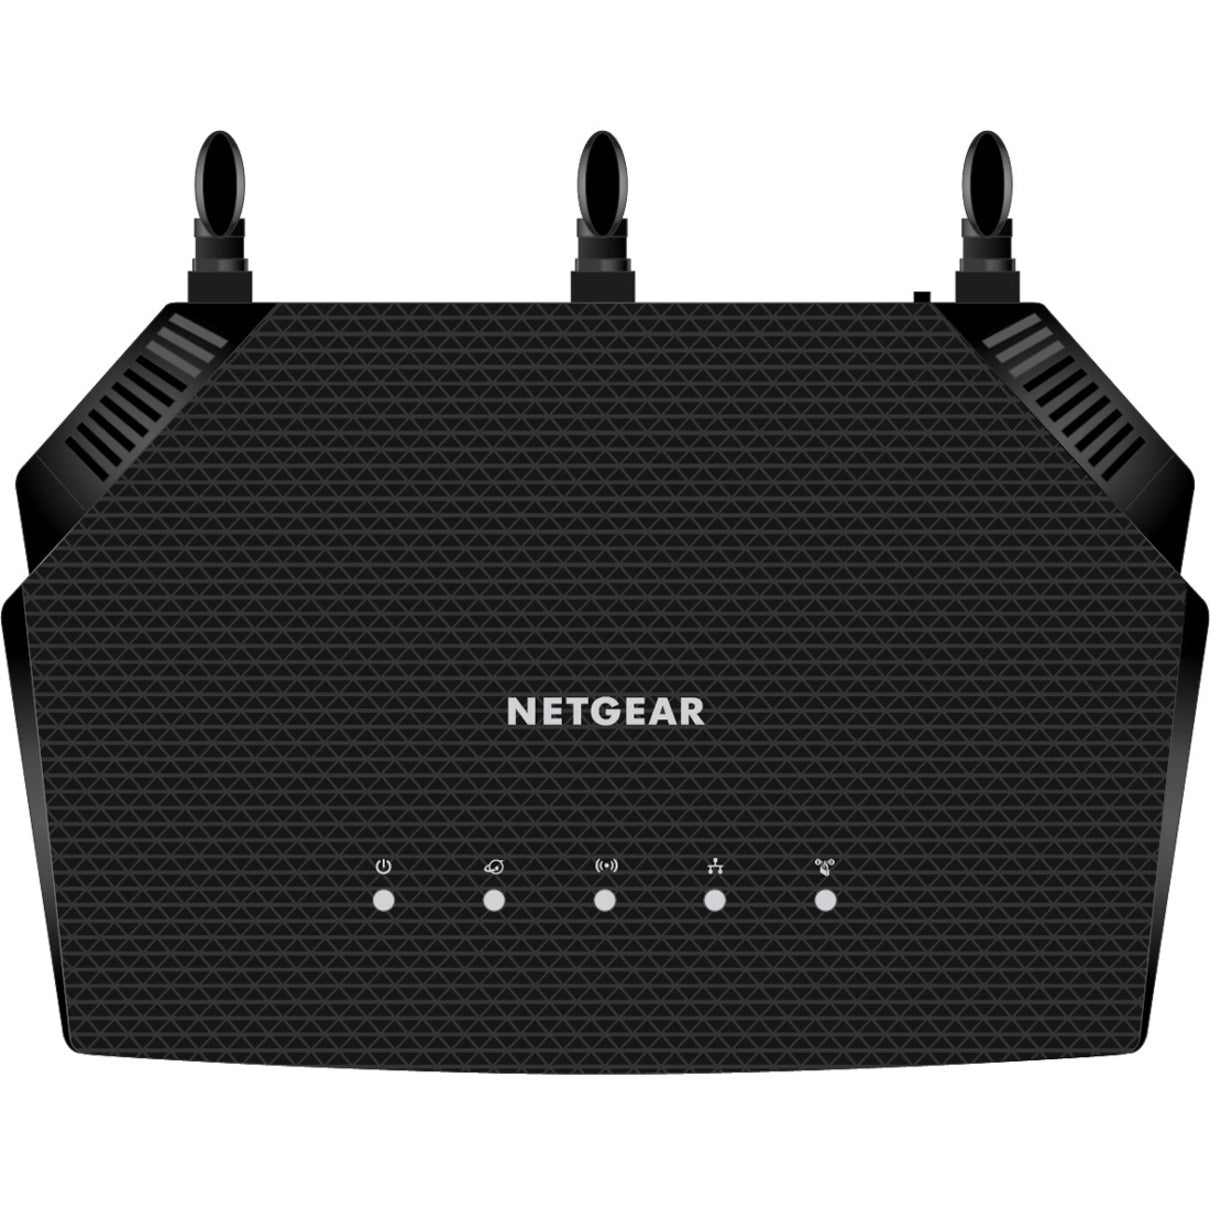 Netgear RAX10-100NAS 4-Stream AX1800 WiFi 6 Router, Gigabit Ethernet, 225 MB/s